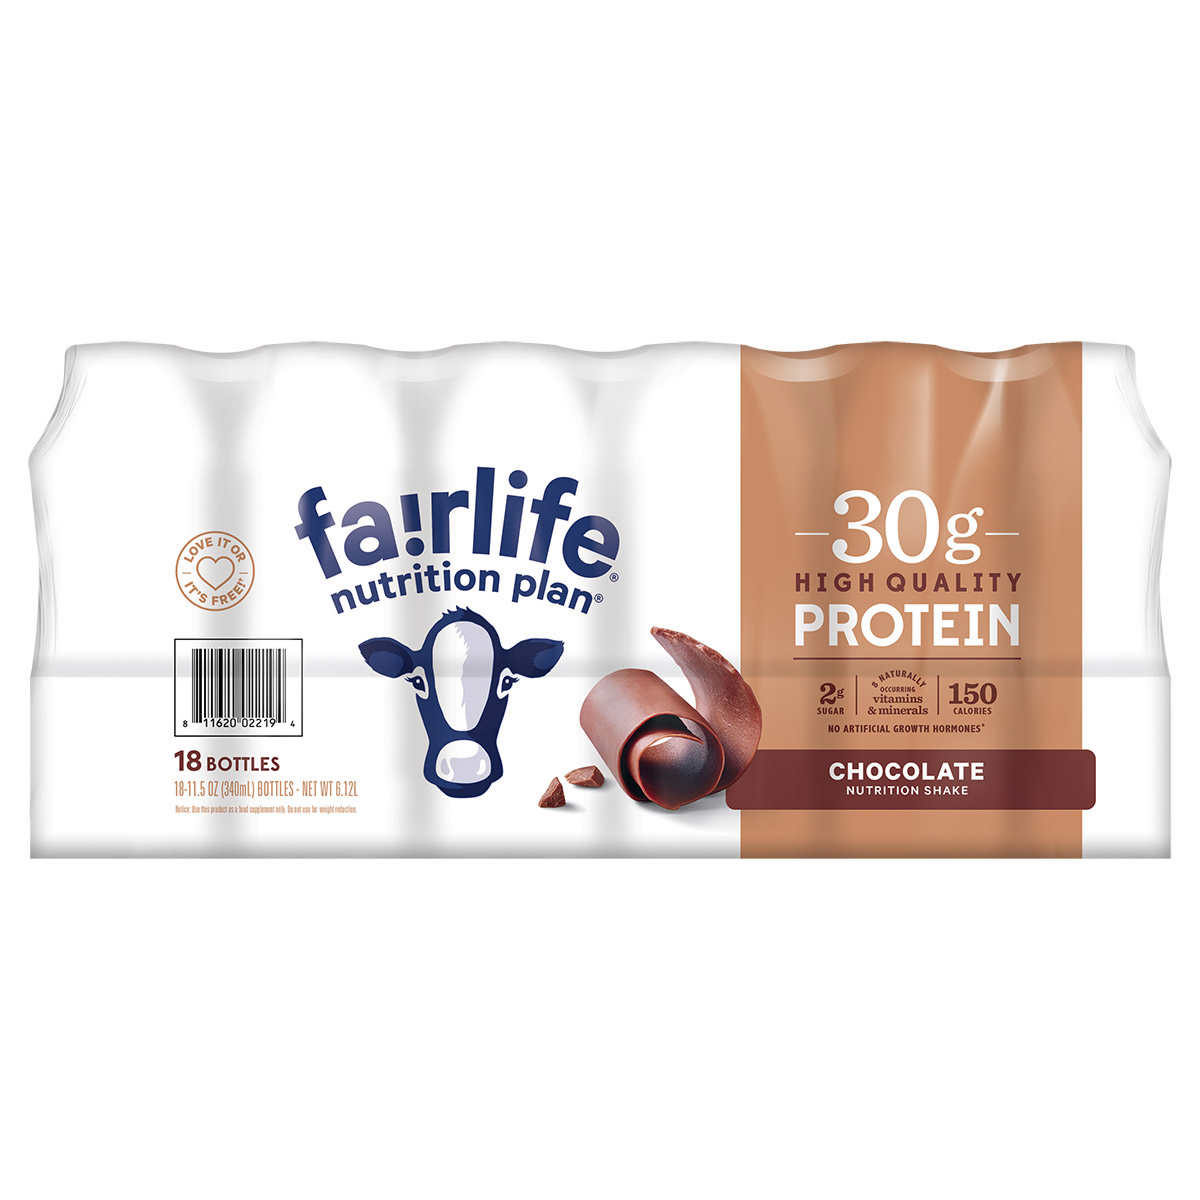 Fairlife Nutrition Plan 30g Protein Shake